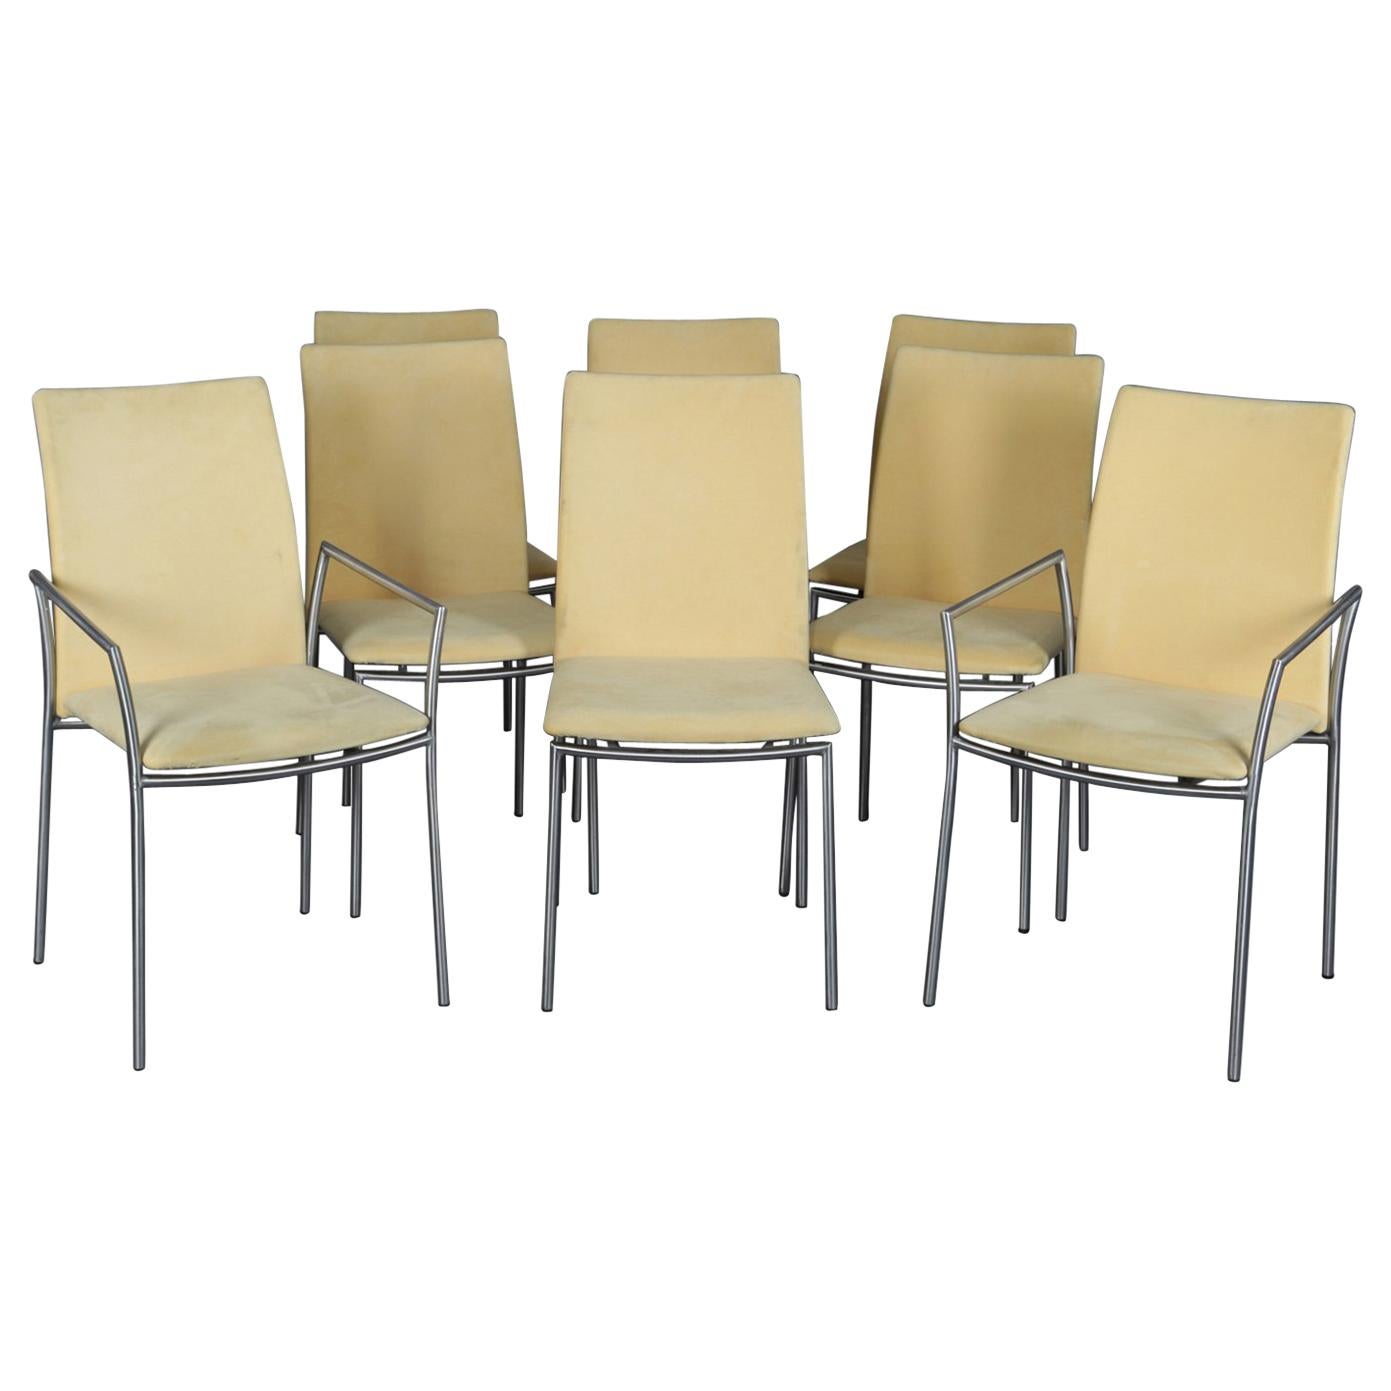 8 Mid-Century Modern Danish Minimalist Dining Chairs by Skovby, 20th Century